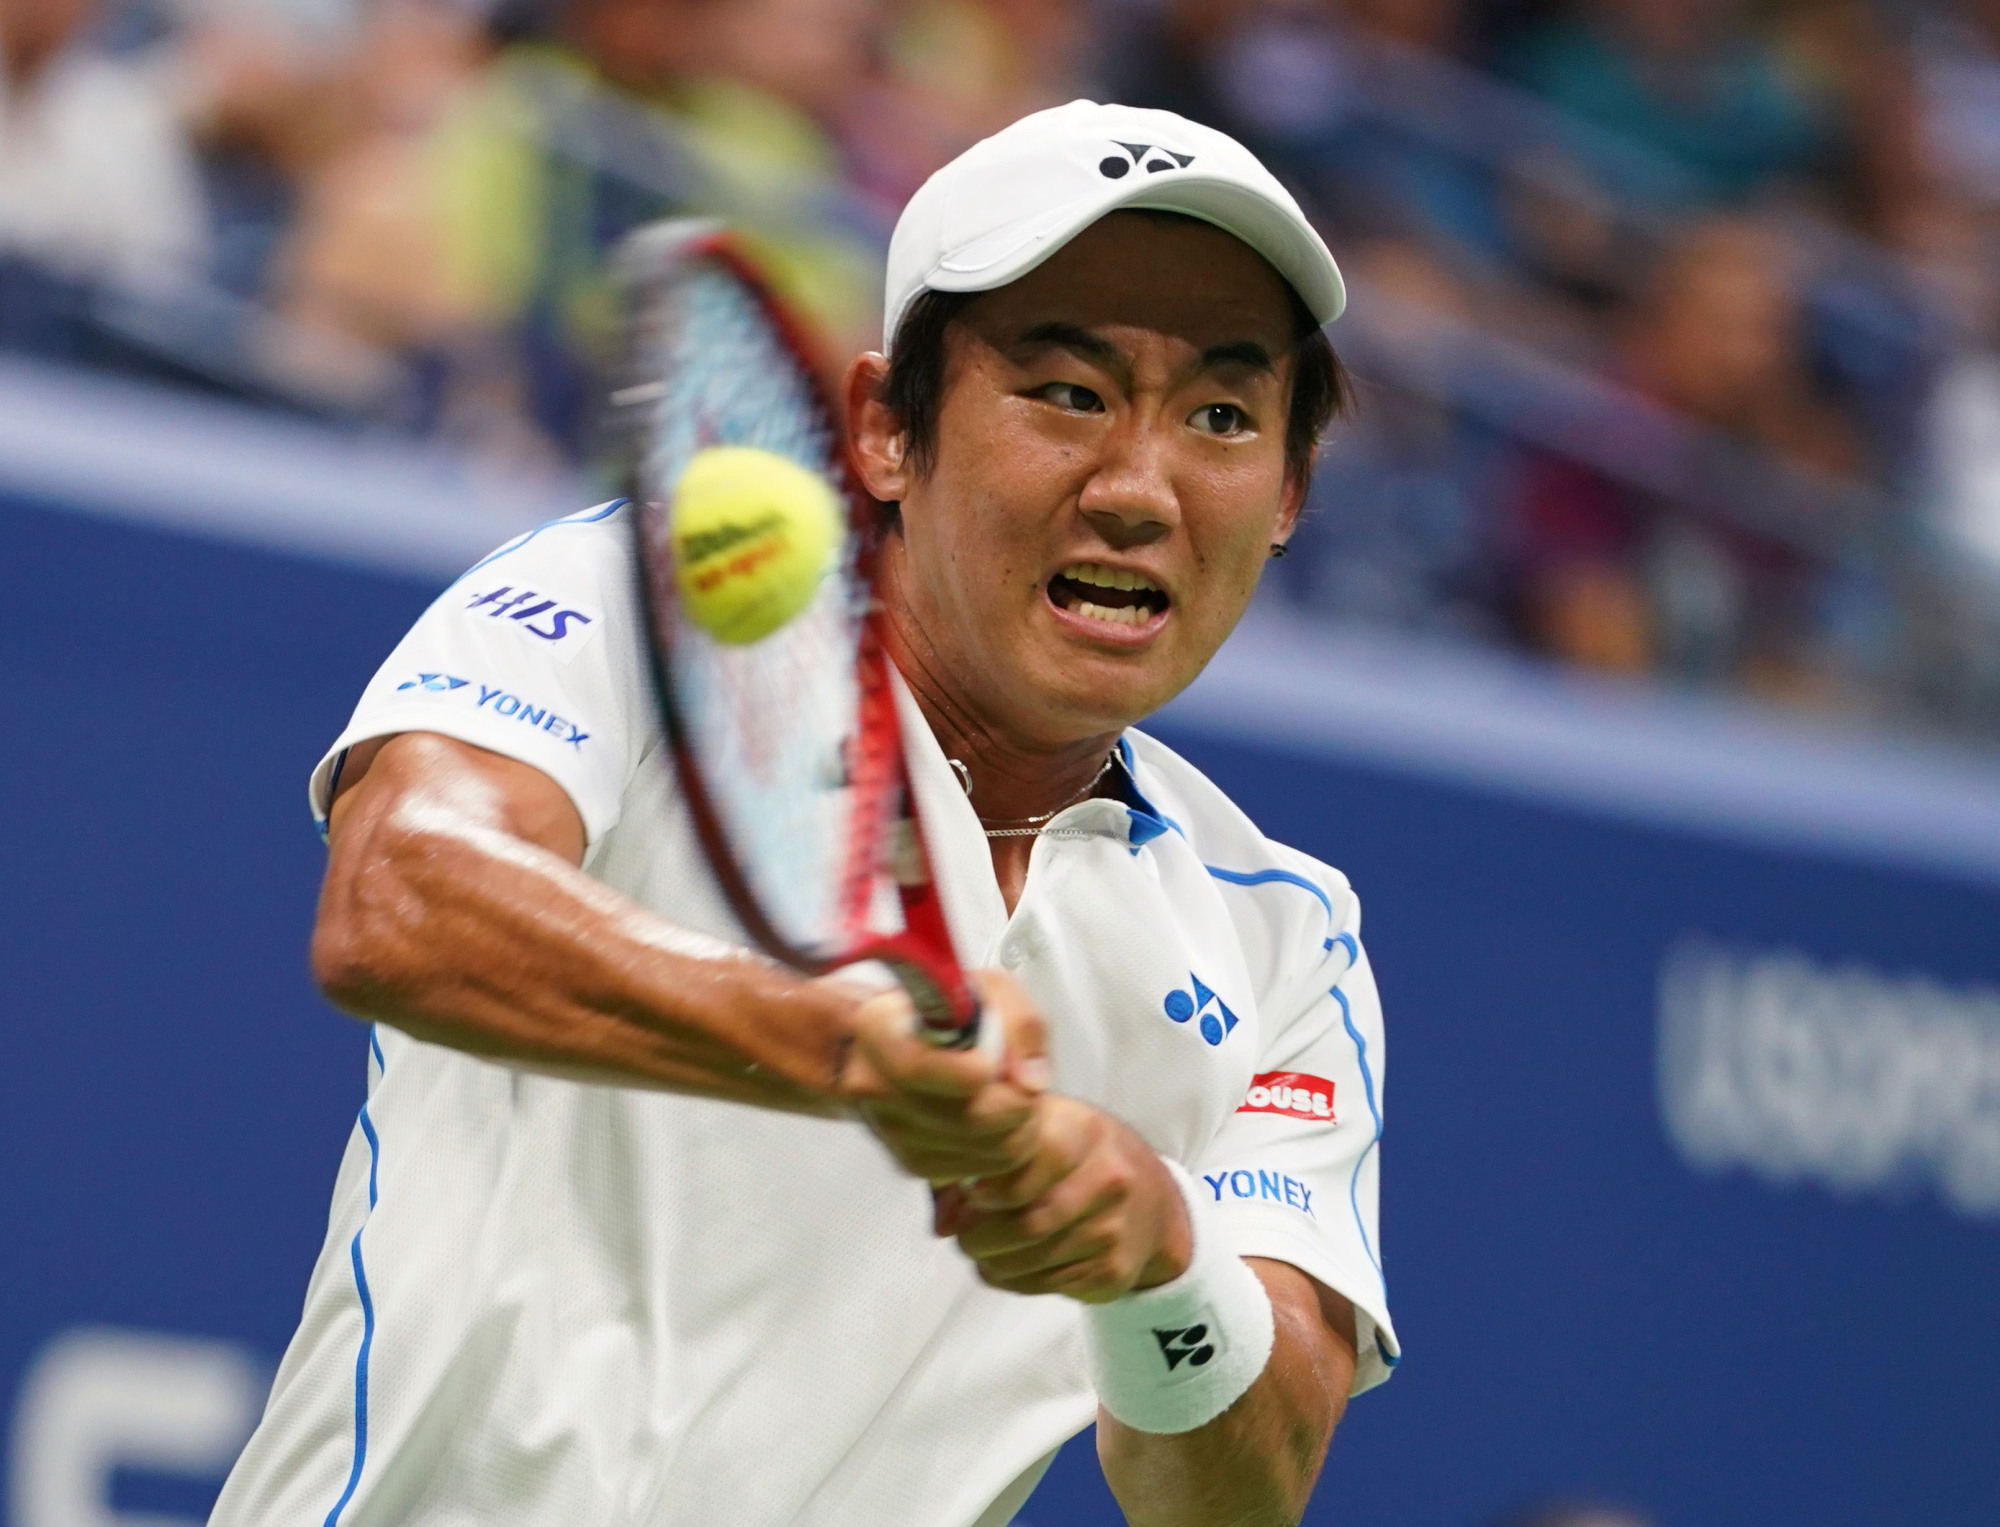 Nishioka succumbs to Federer at U.S